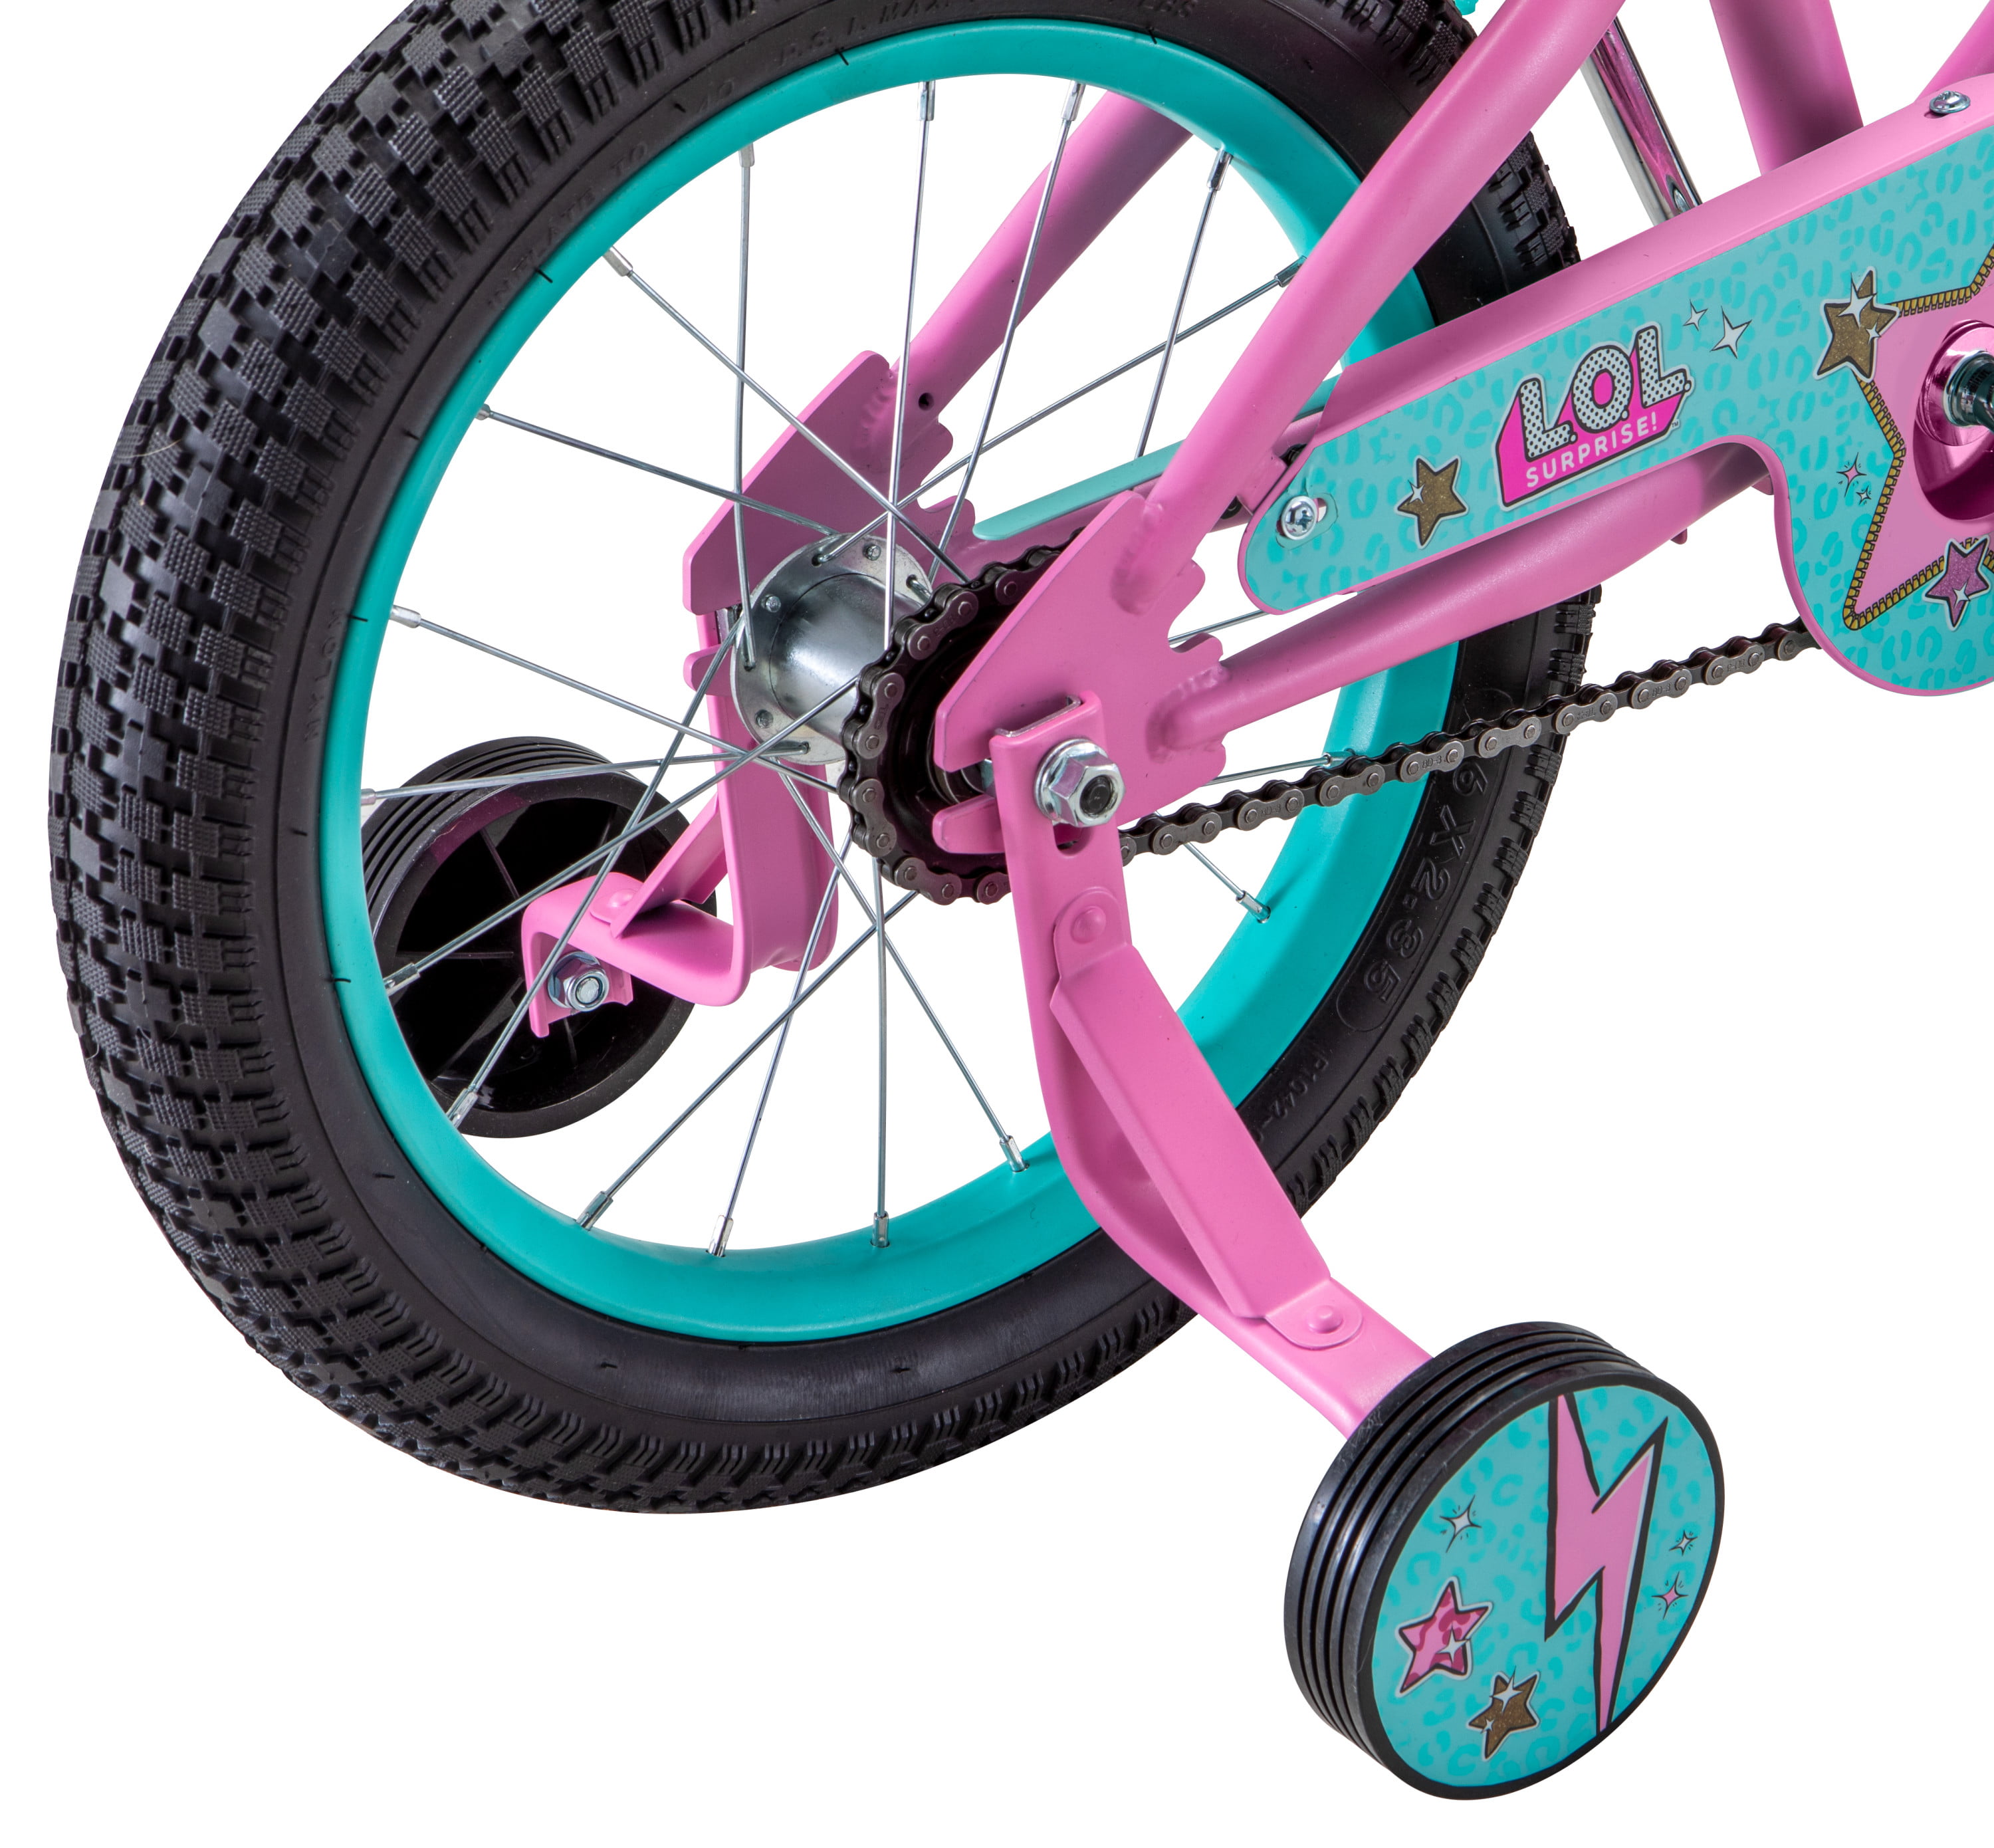 lol bike for girls